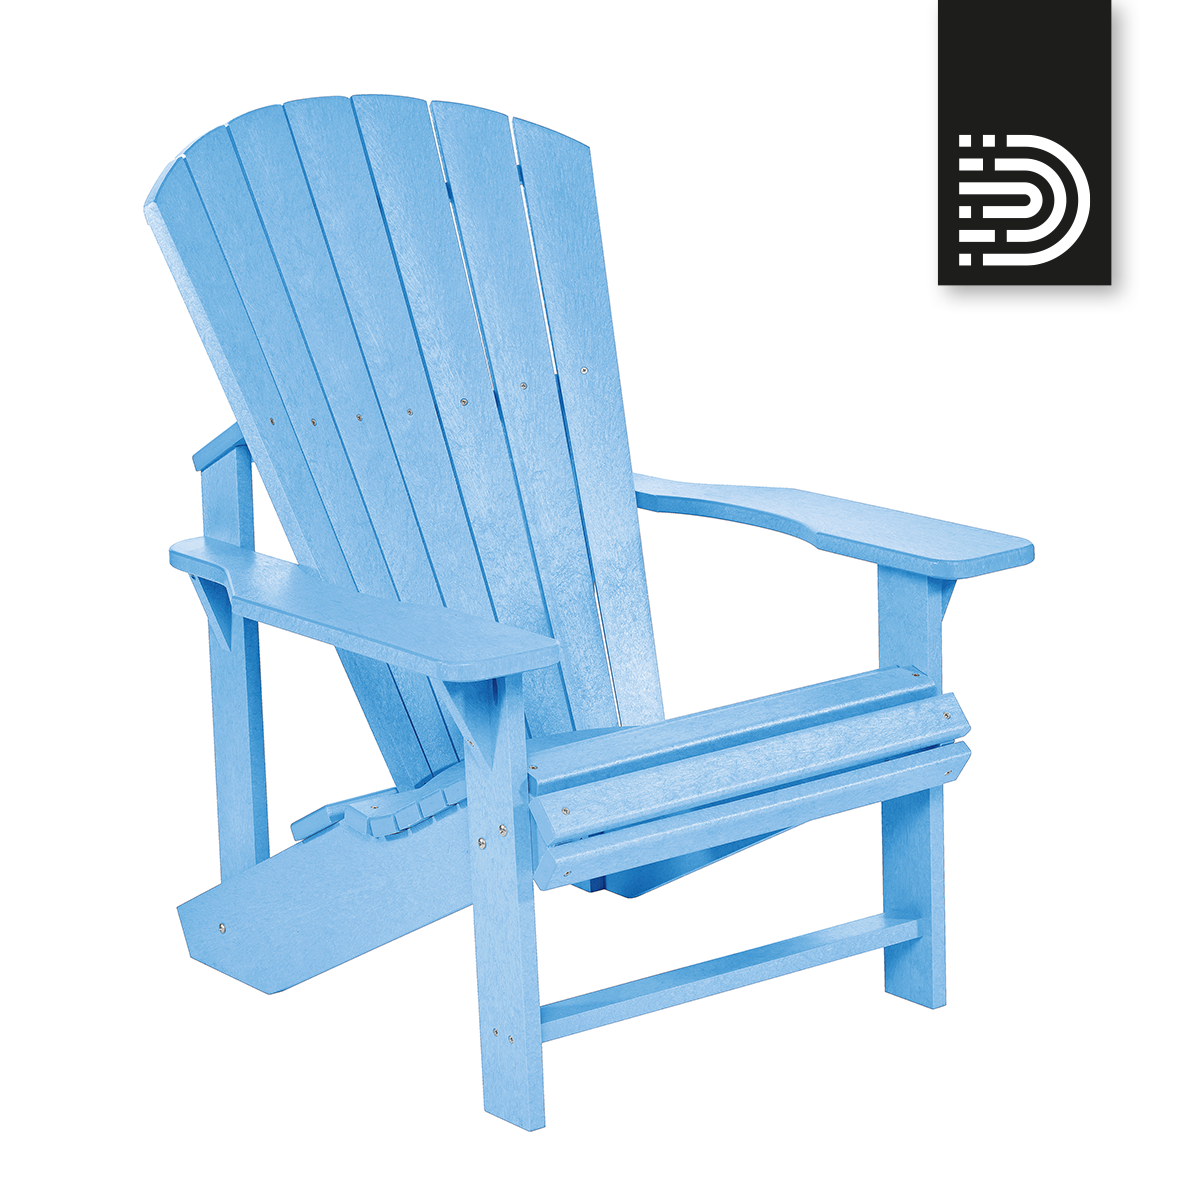  C01 Classic Adirondack Chair - sky blue 12